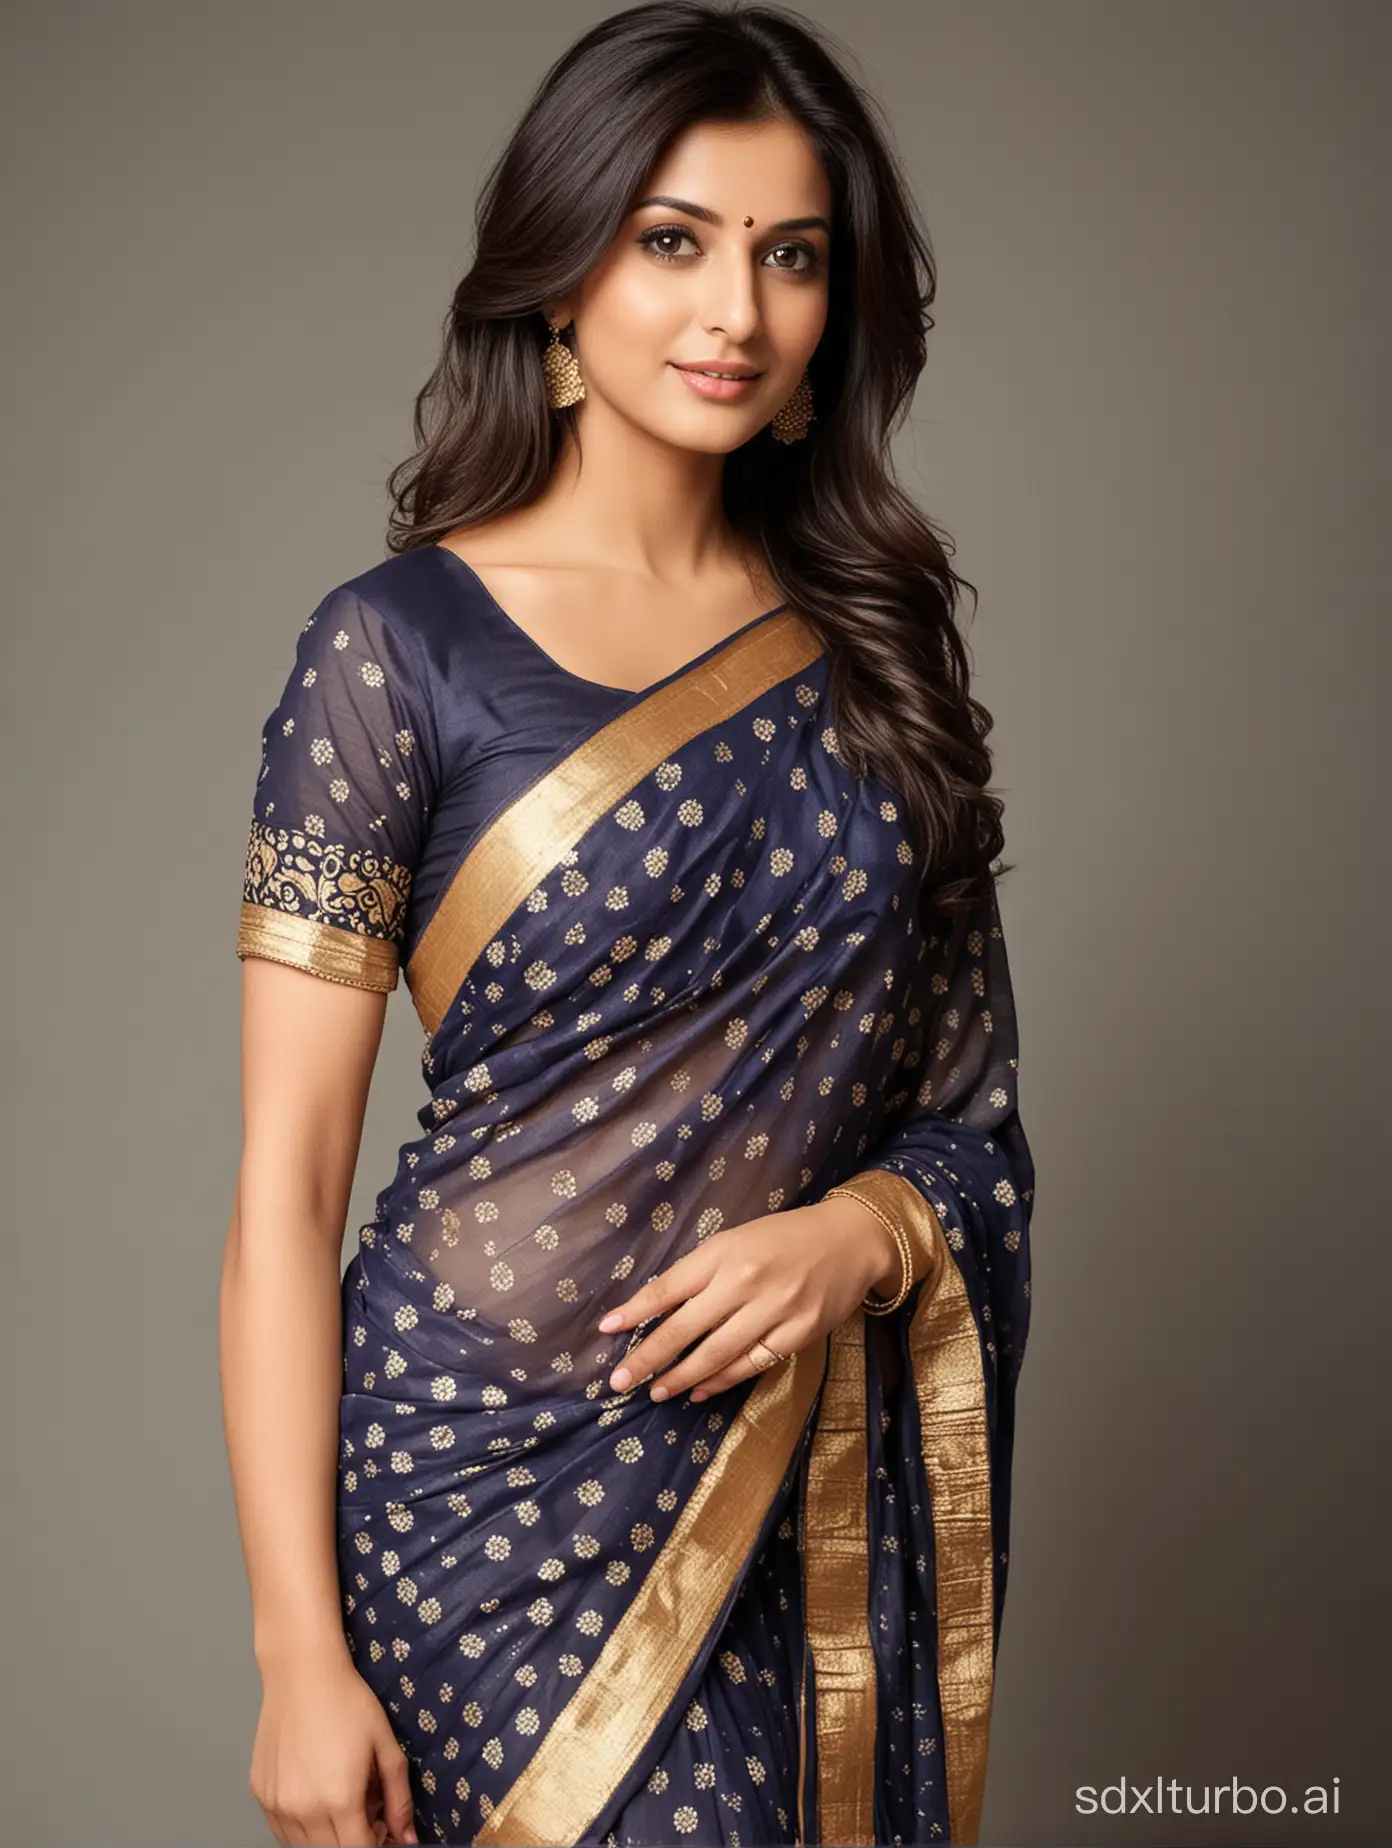 Most beautiful Indian women wearing saree 
